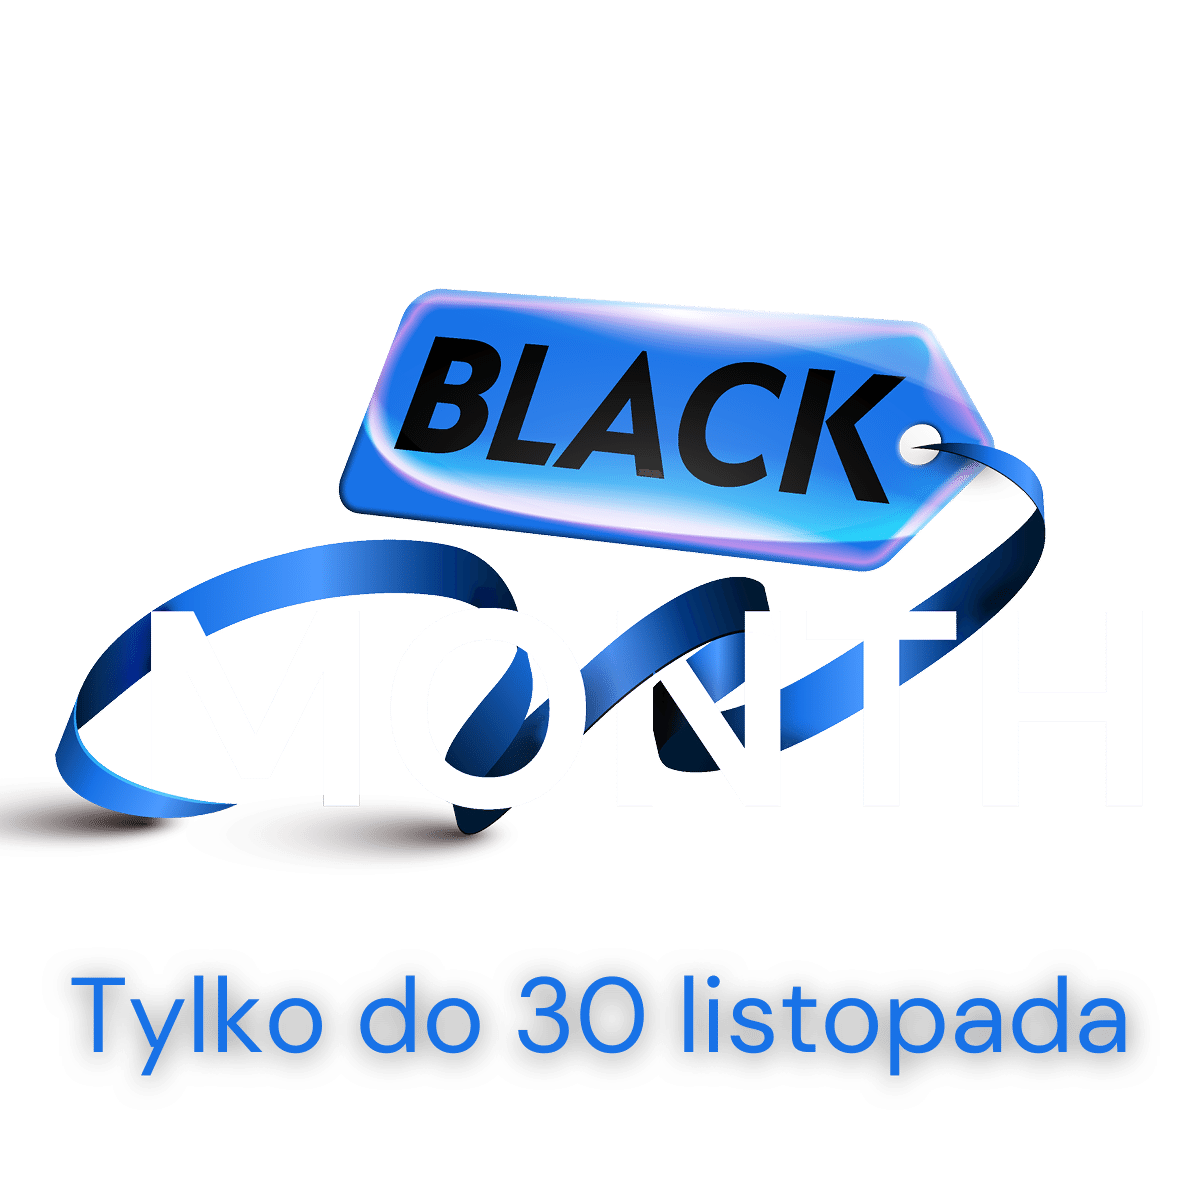 Black_month_2021_image